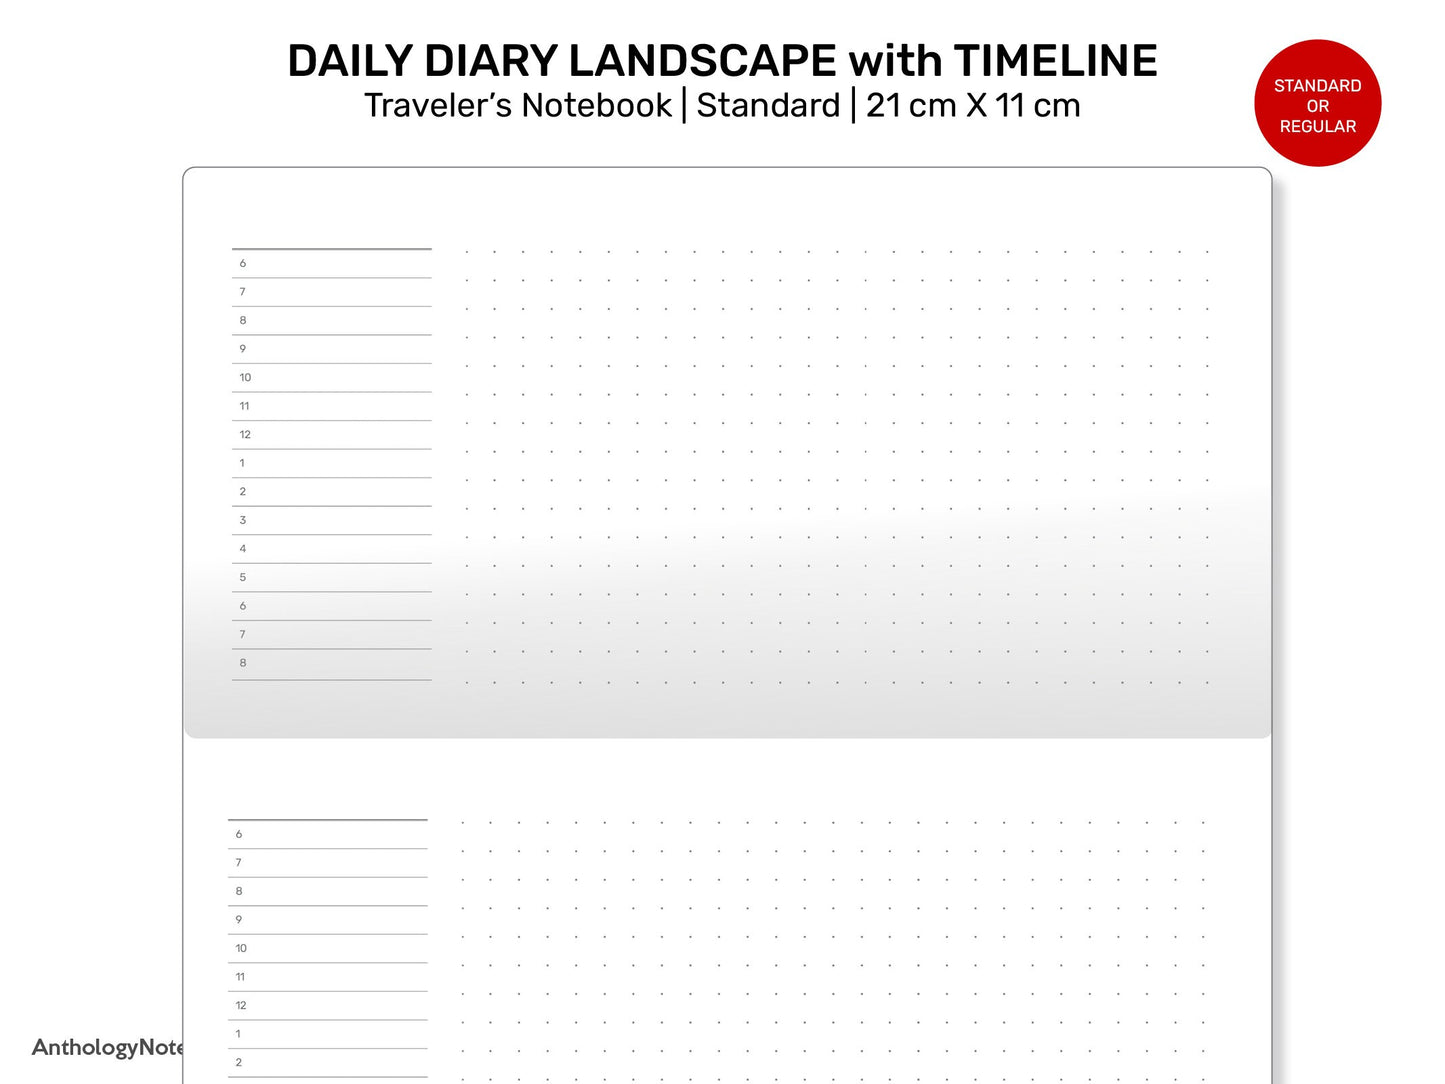 Daily DIARY Landscape TN Standard Printable Minimalist Refill Insert